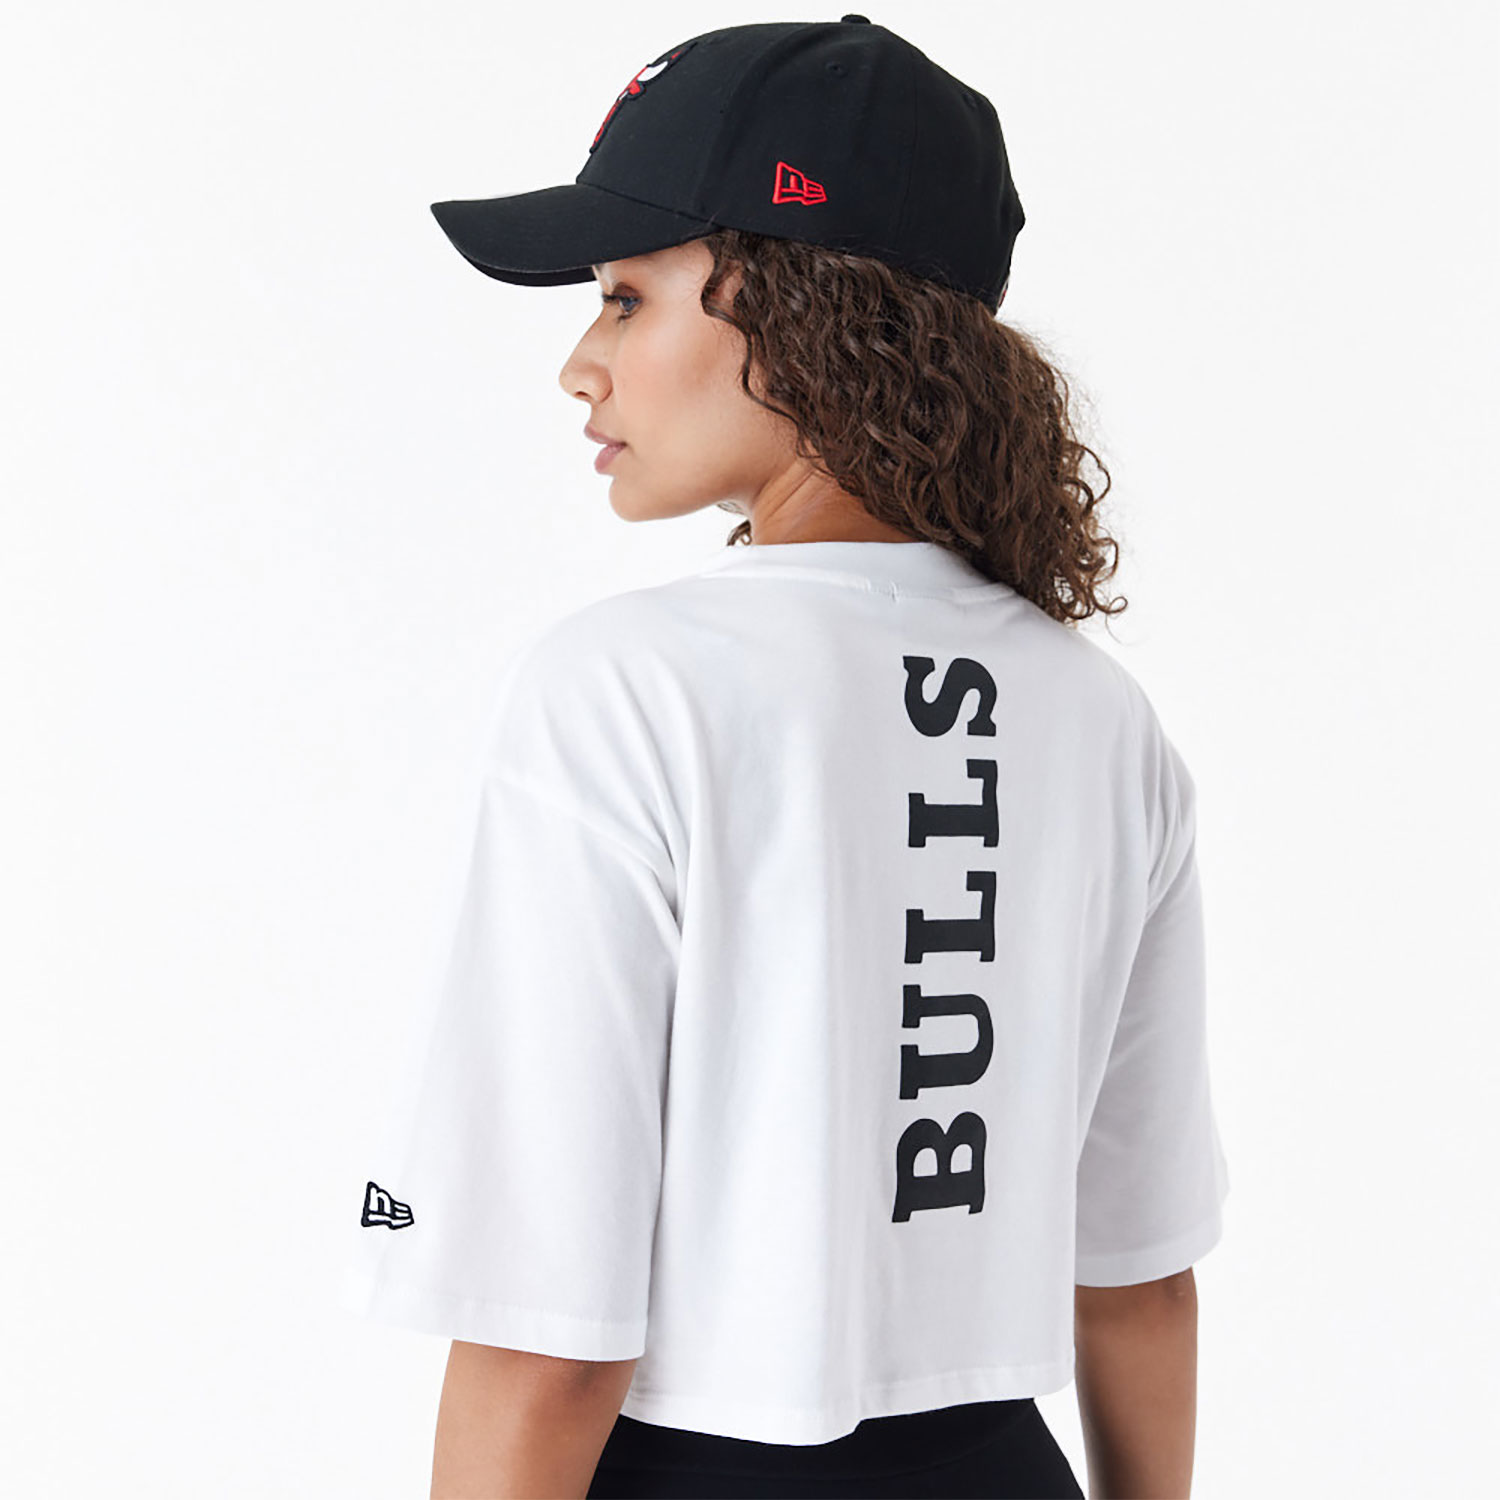 Chicago Bulls Womens NBA Team Logo White Crop T-Shirt